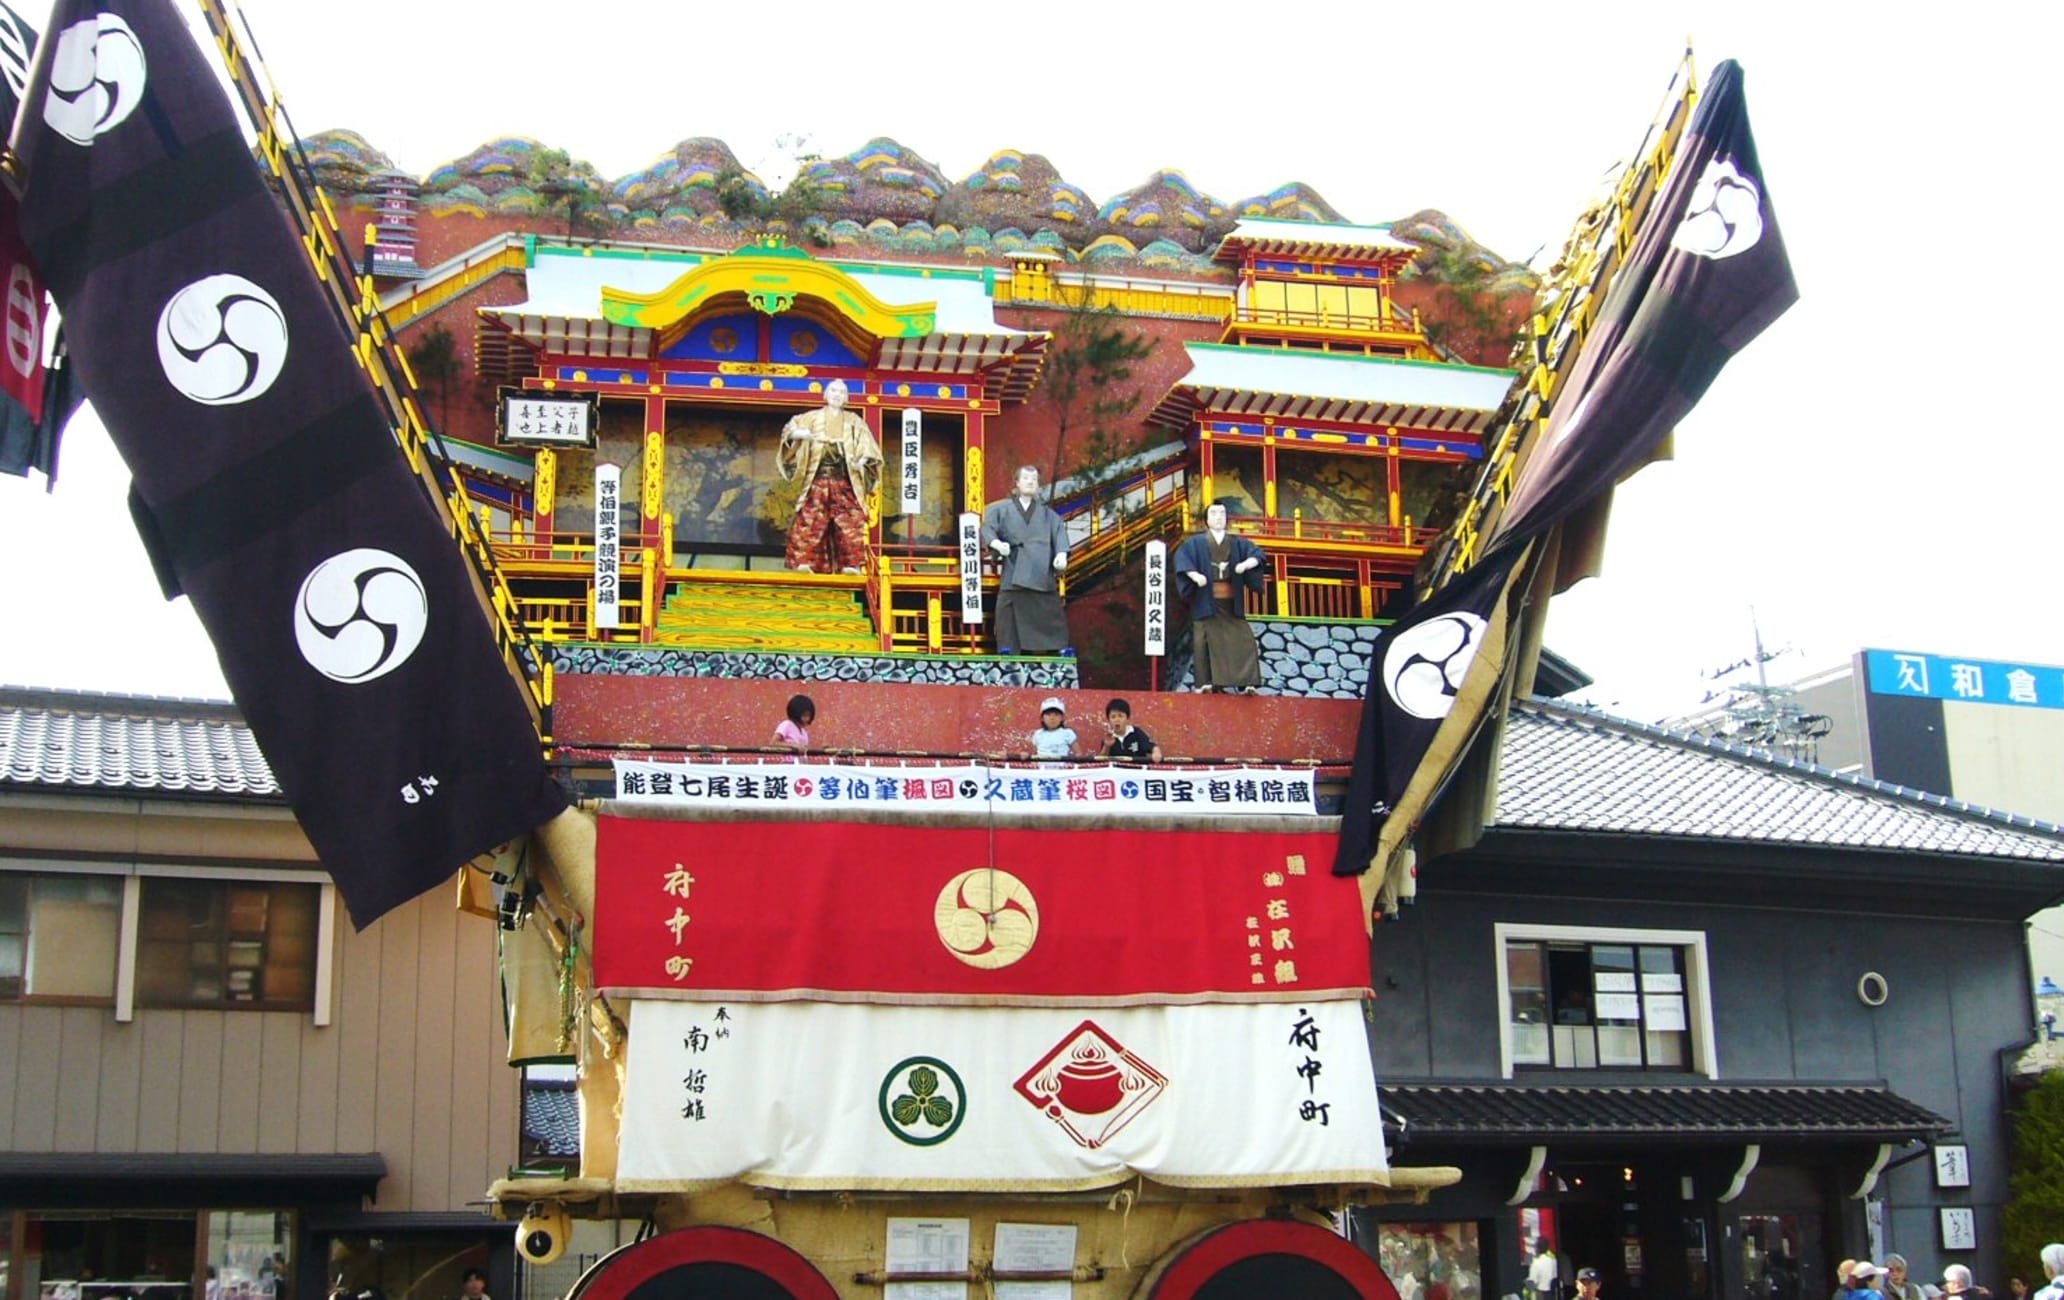 DEKAYAMA Giant Mountains The largest floats of Japan's festival